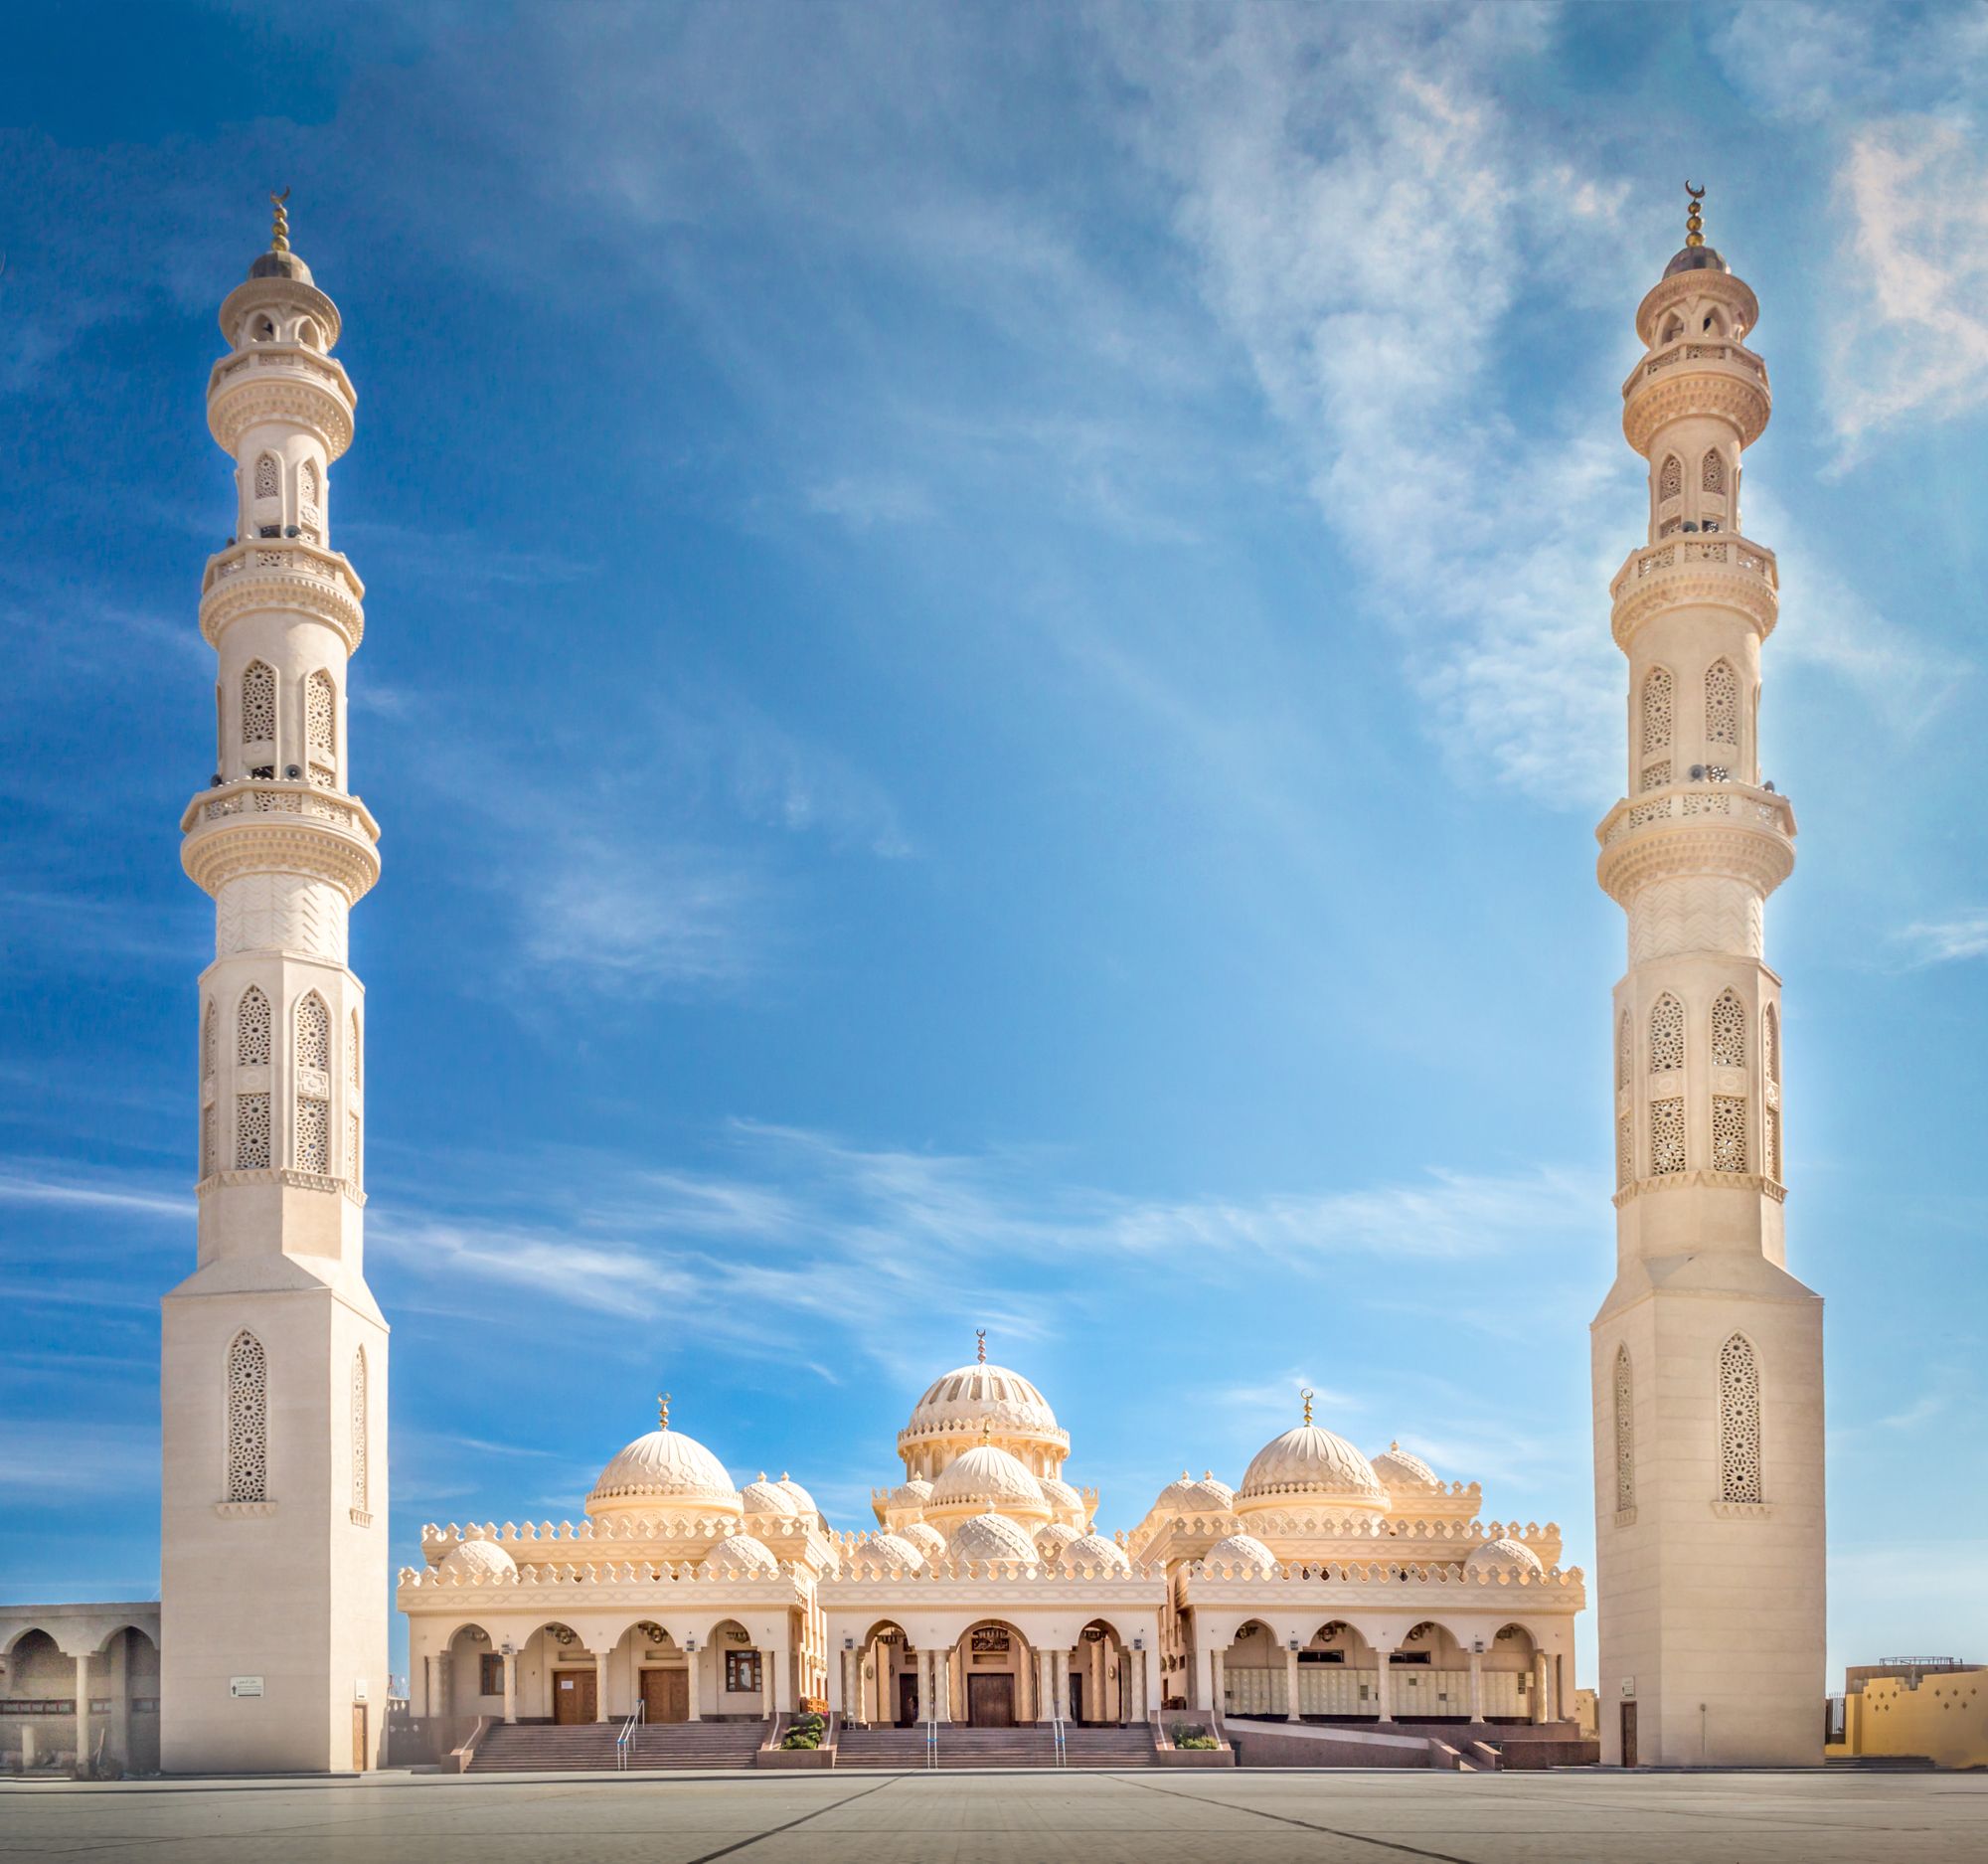 The El Mina Mosque on Sheraton Street, Hurghada